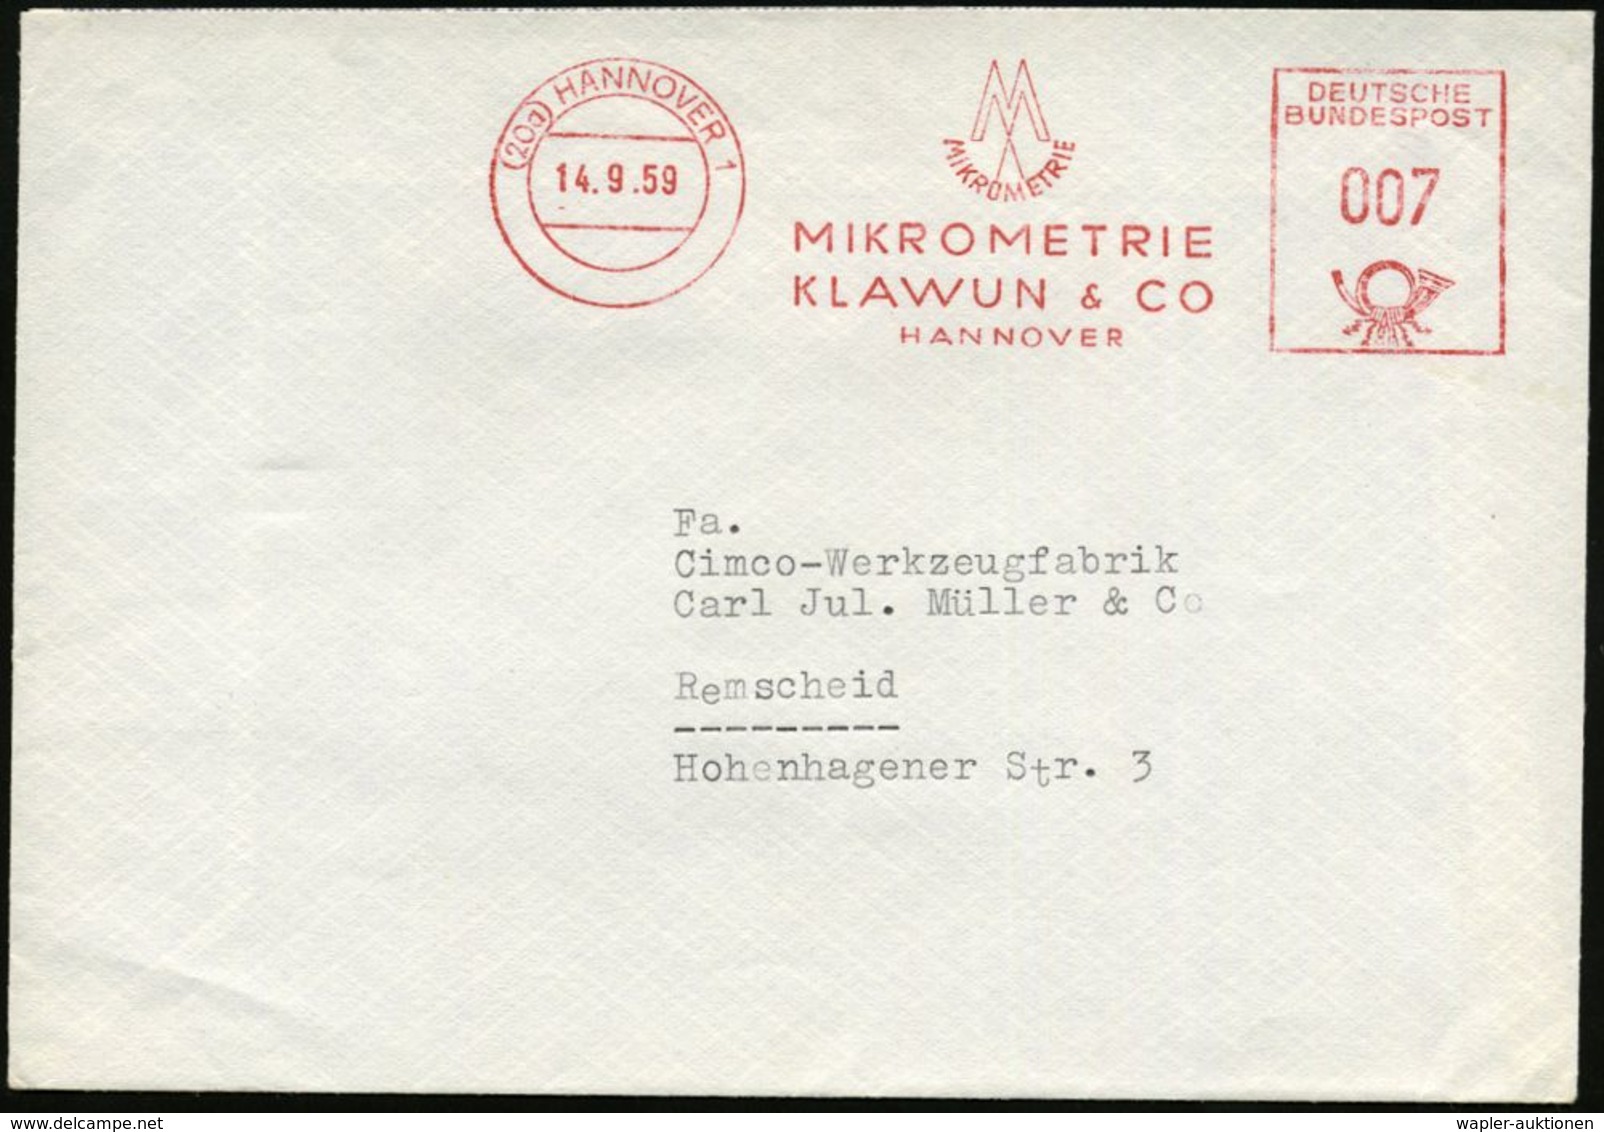 MATHEMATIK / RECHNEN / ZAHLEN / GEOMETRIE : (20a) HANNOVER 1/ MIKROMETRIE/ KLAWUN & CO 1959 (14.9.) AFS (Monogramm-Logo) - Ohne Zuordnung